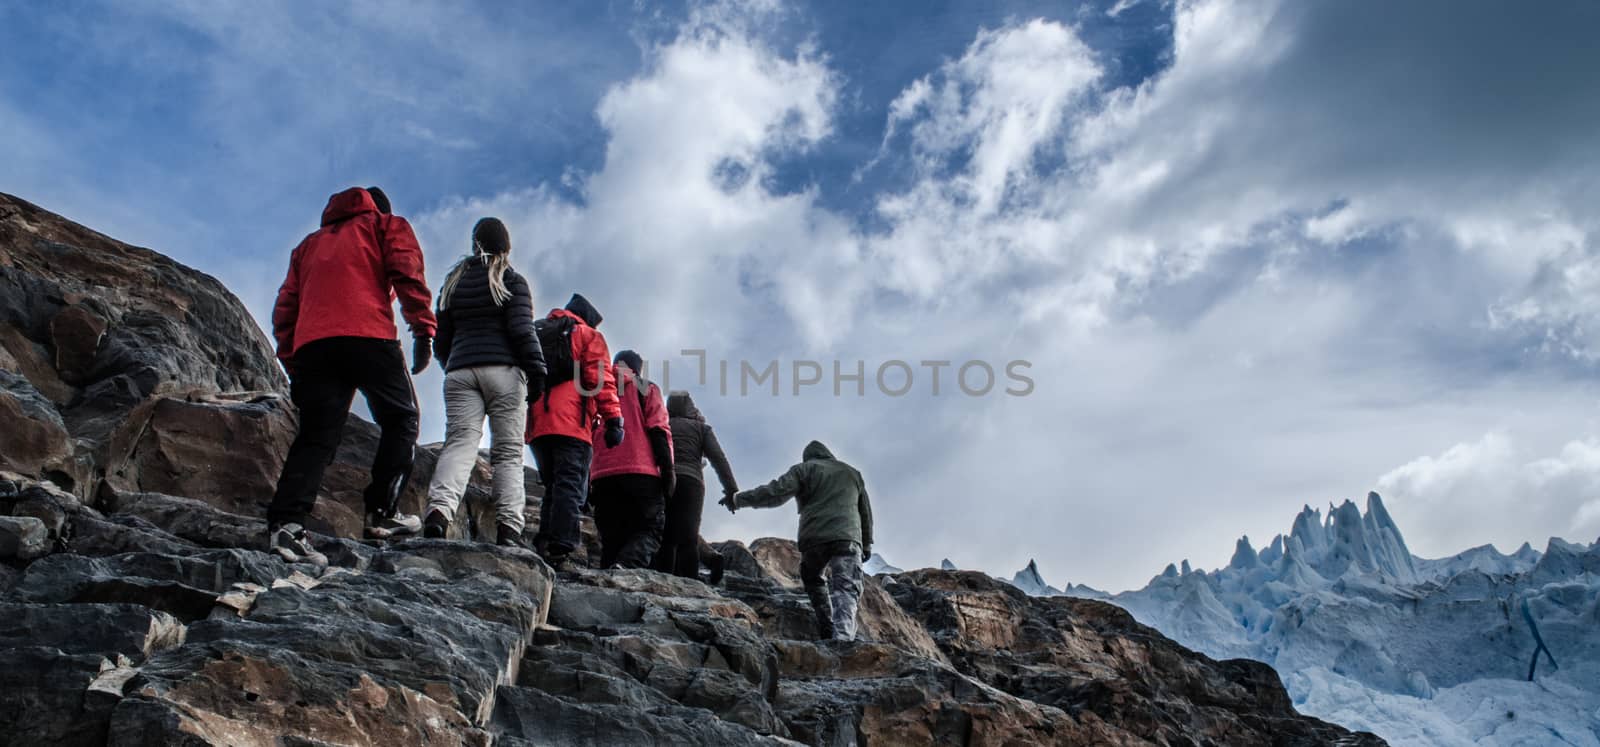 Climbing the Perito Moreno by mikelju